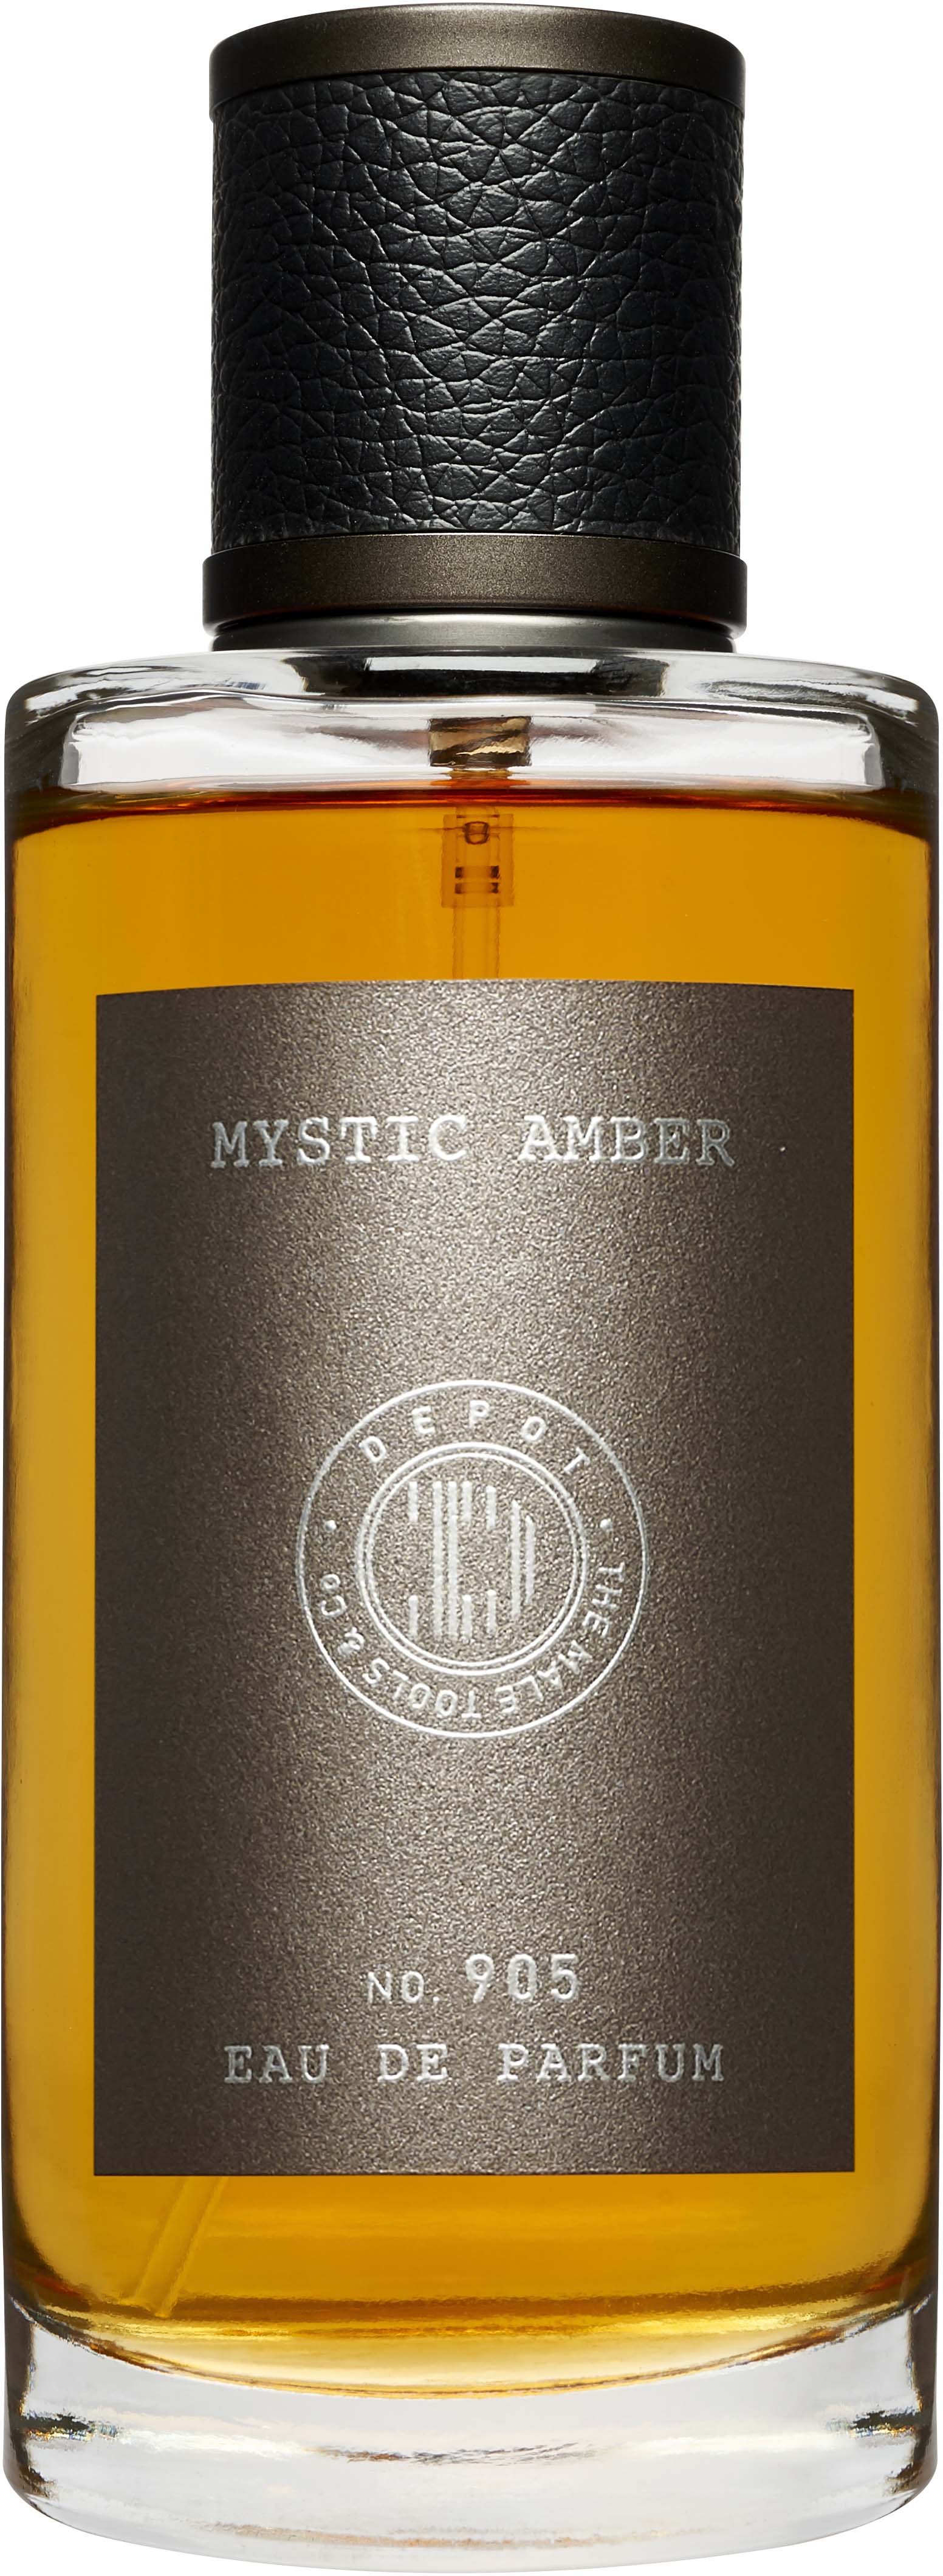 depot no. 905 - mystic amber woda perfumowana 100 ml   